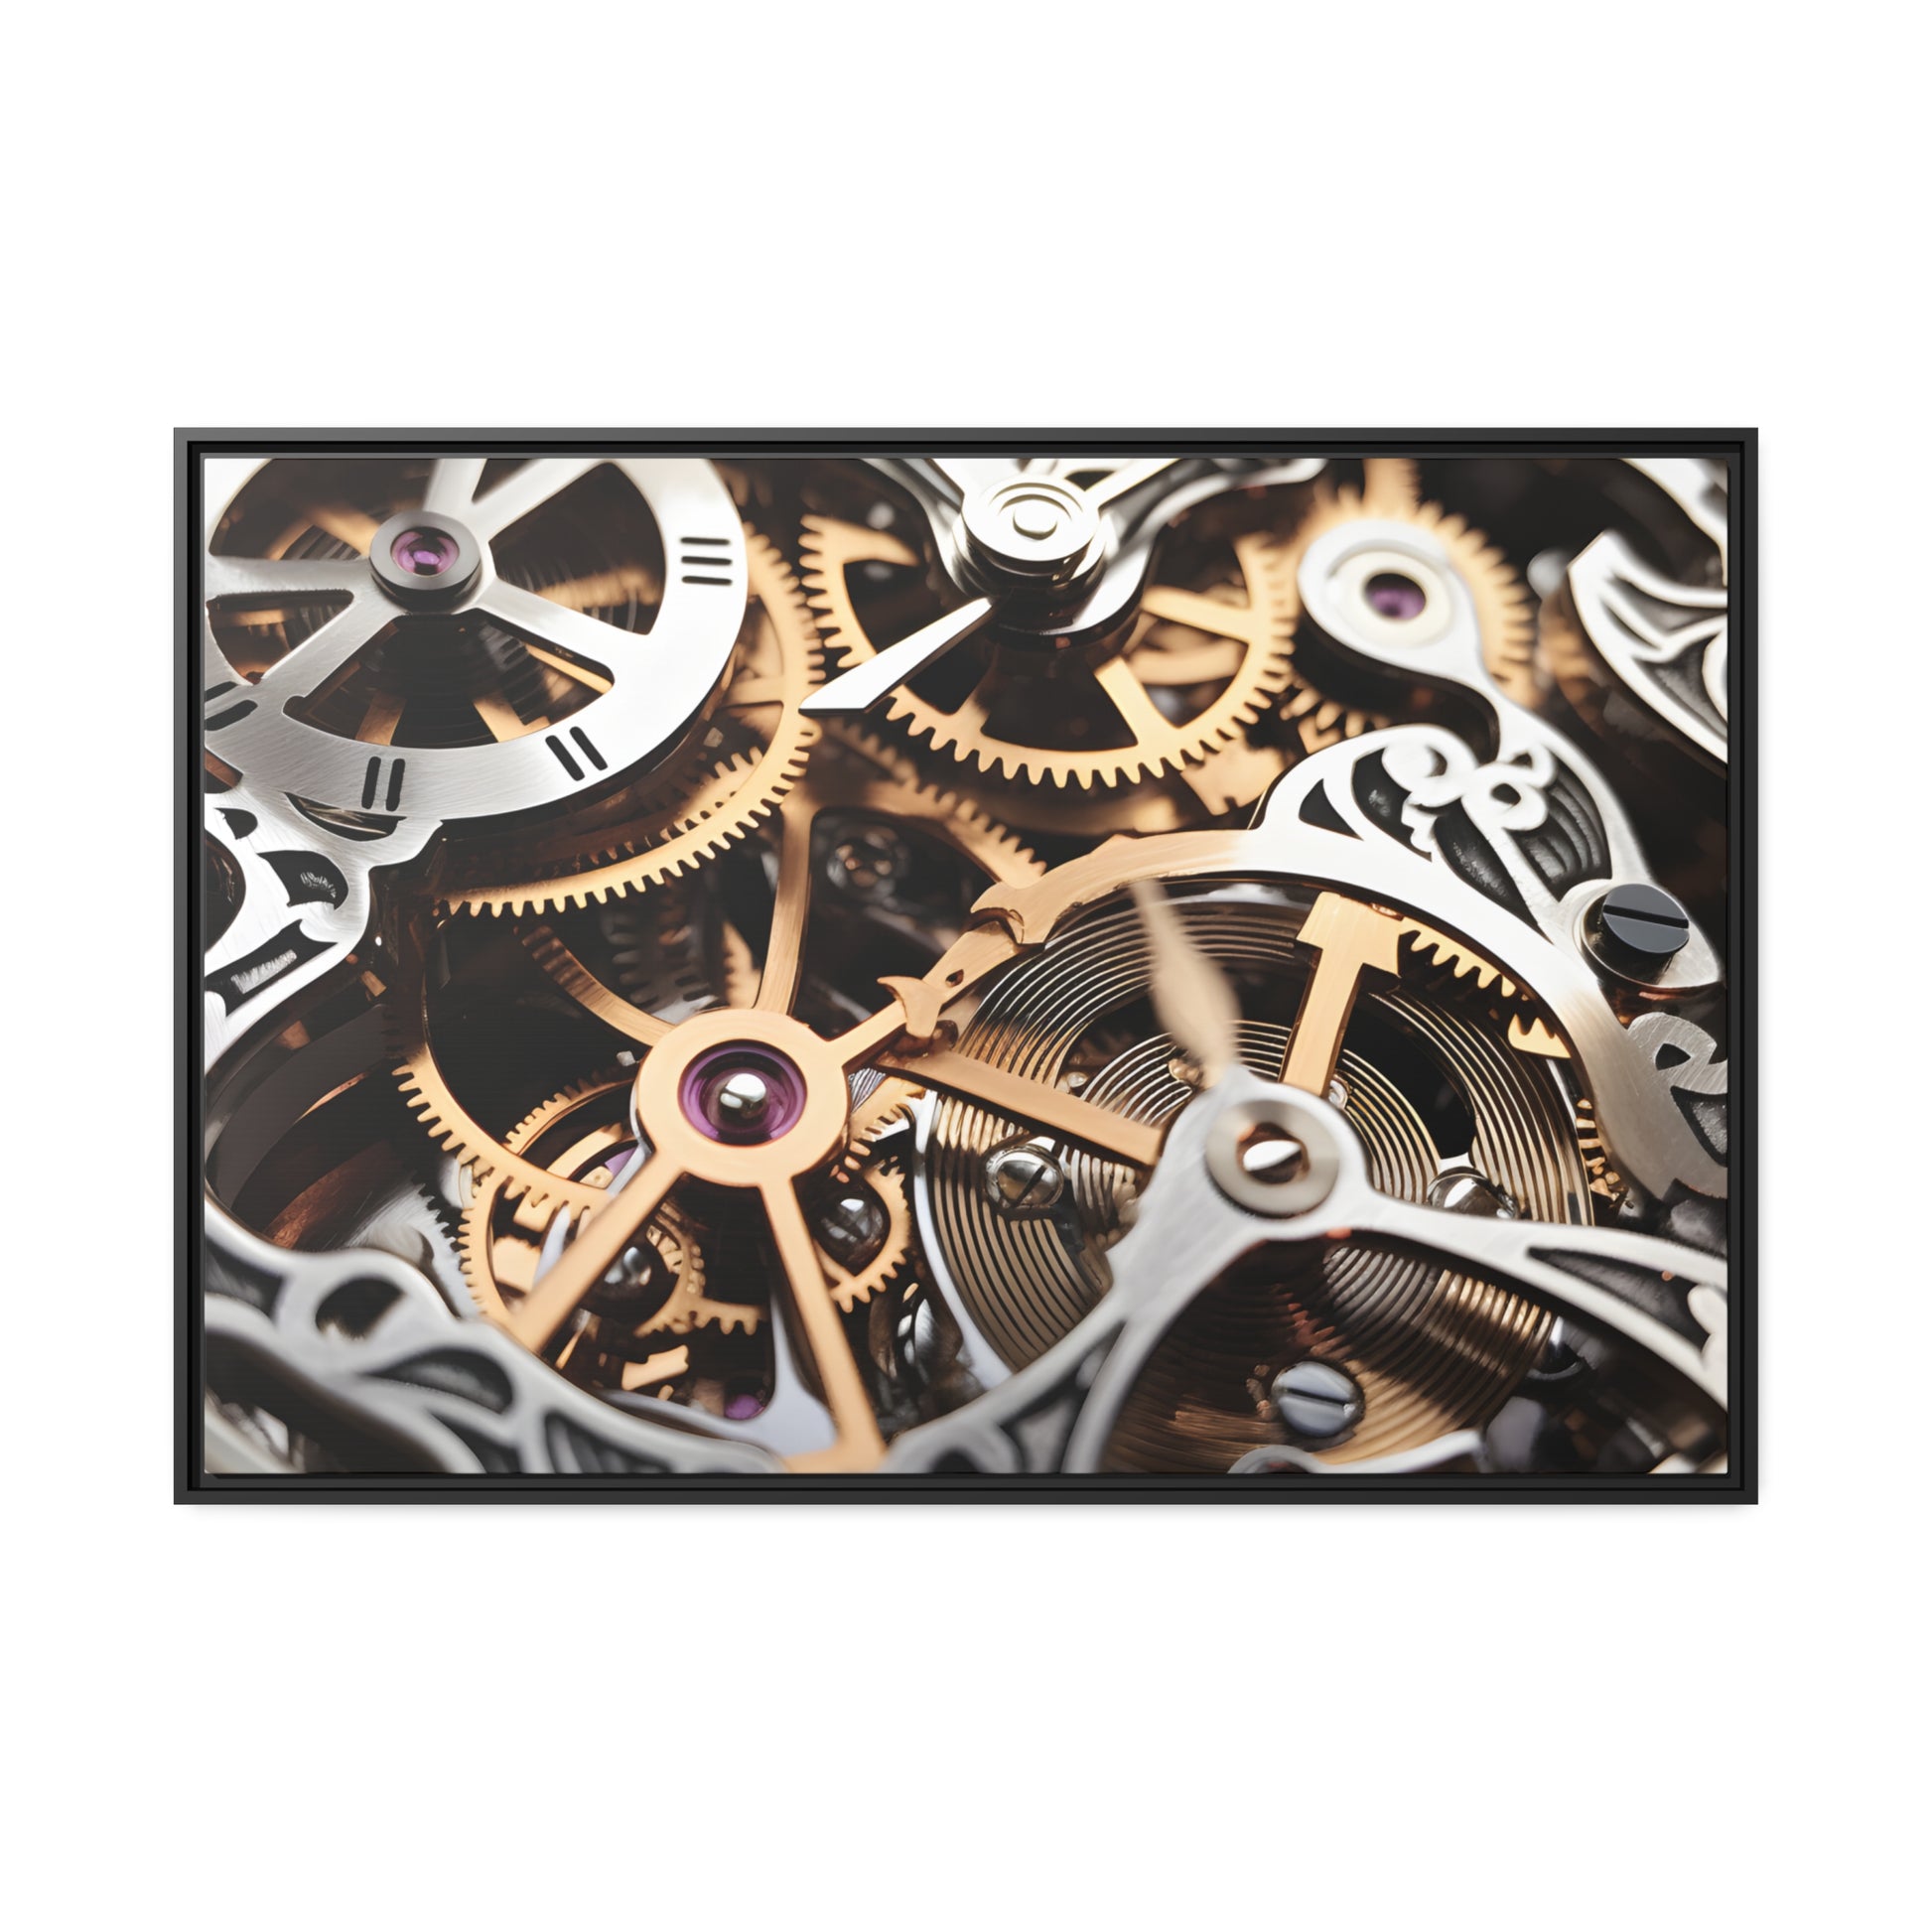 Beautiful Skeletonized Mechanical Watch Framed Canvas Art 48" x 32" (Horizontal Orientation)